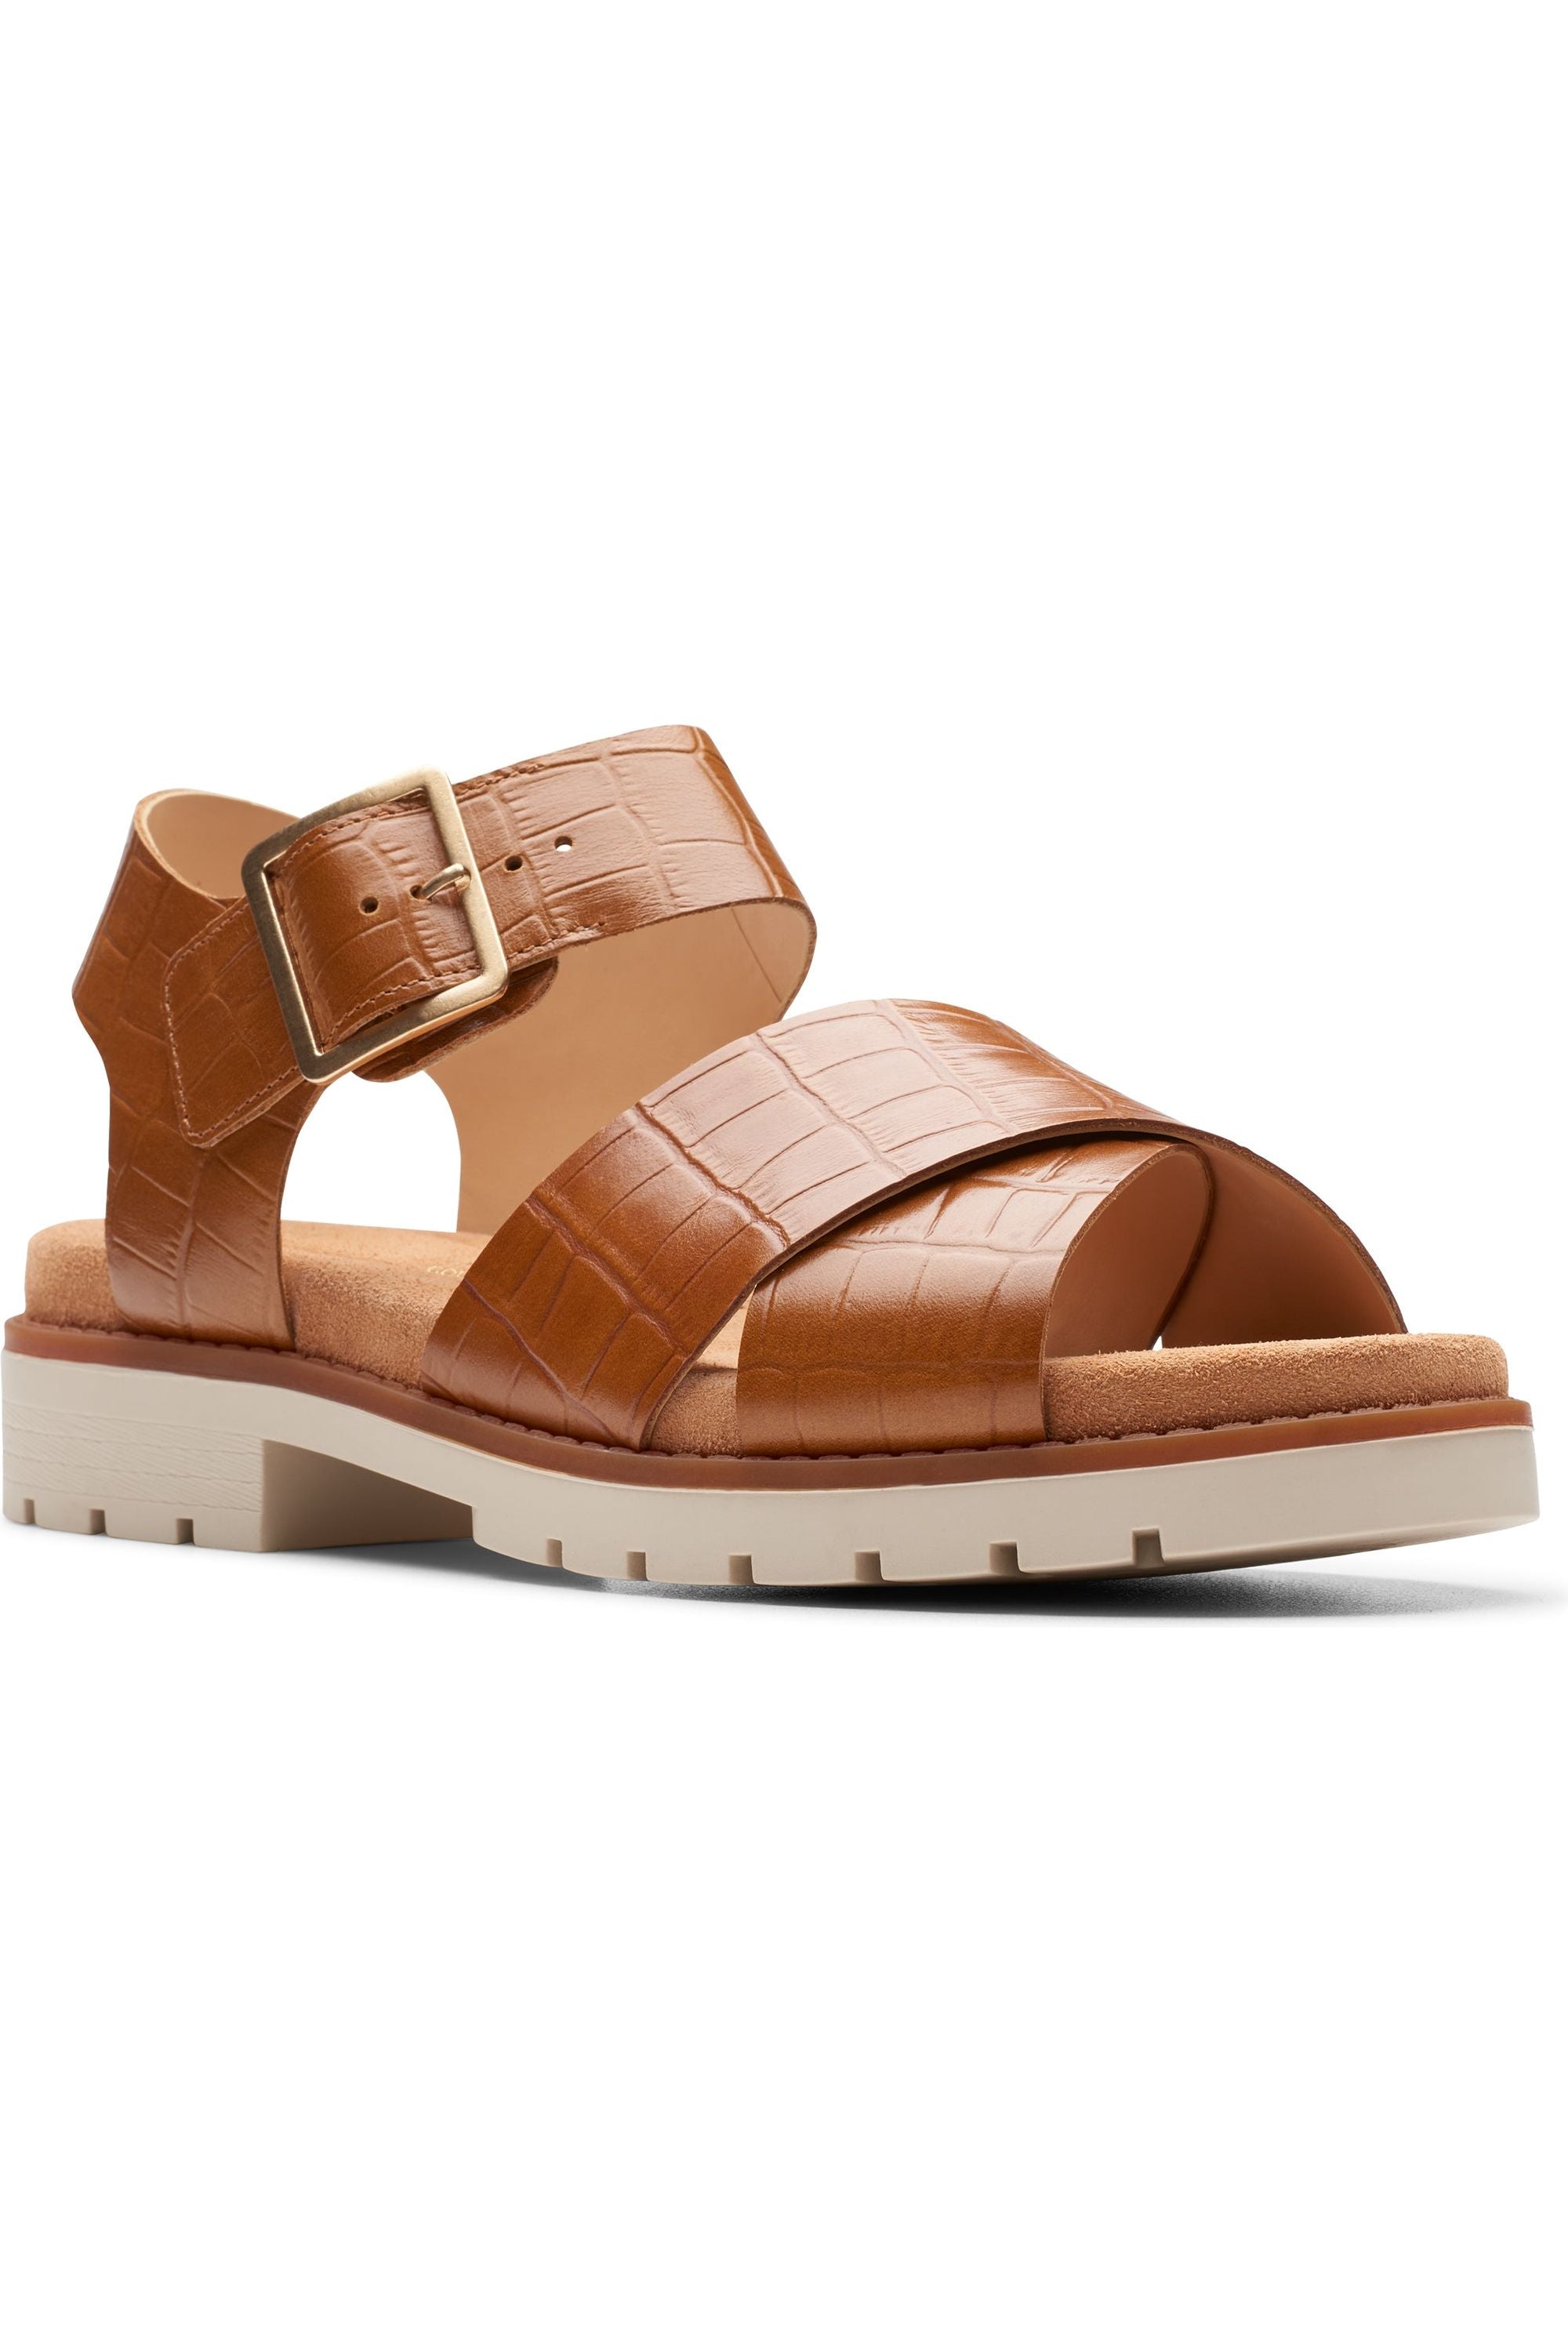 Clarks Orinoco Cross tan interest sandal